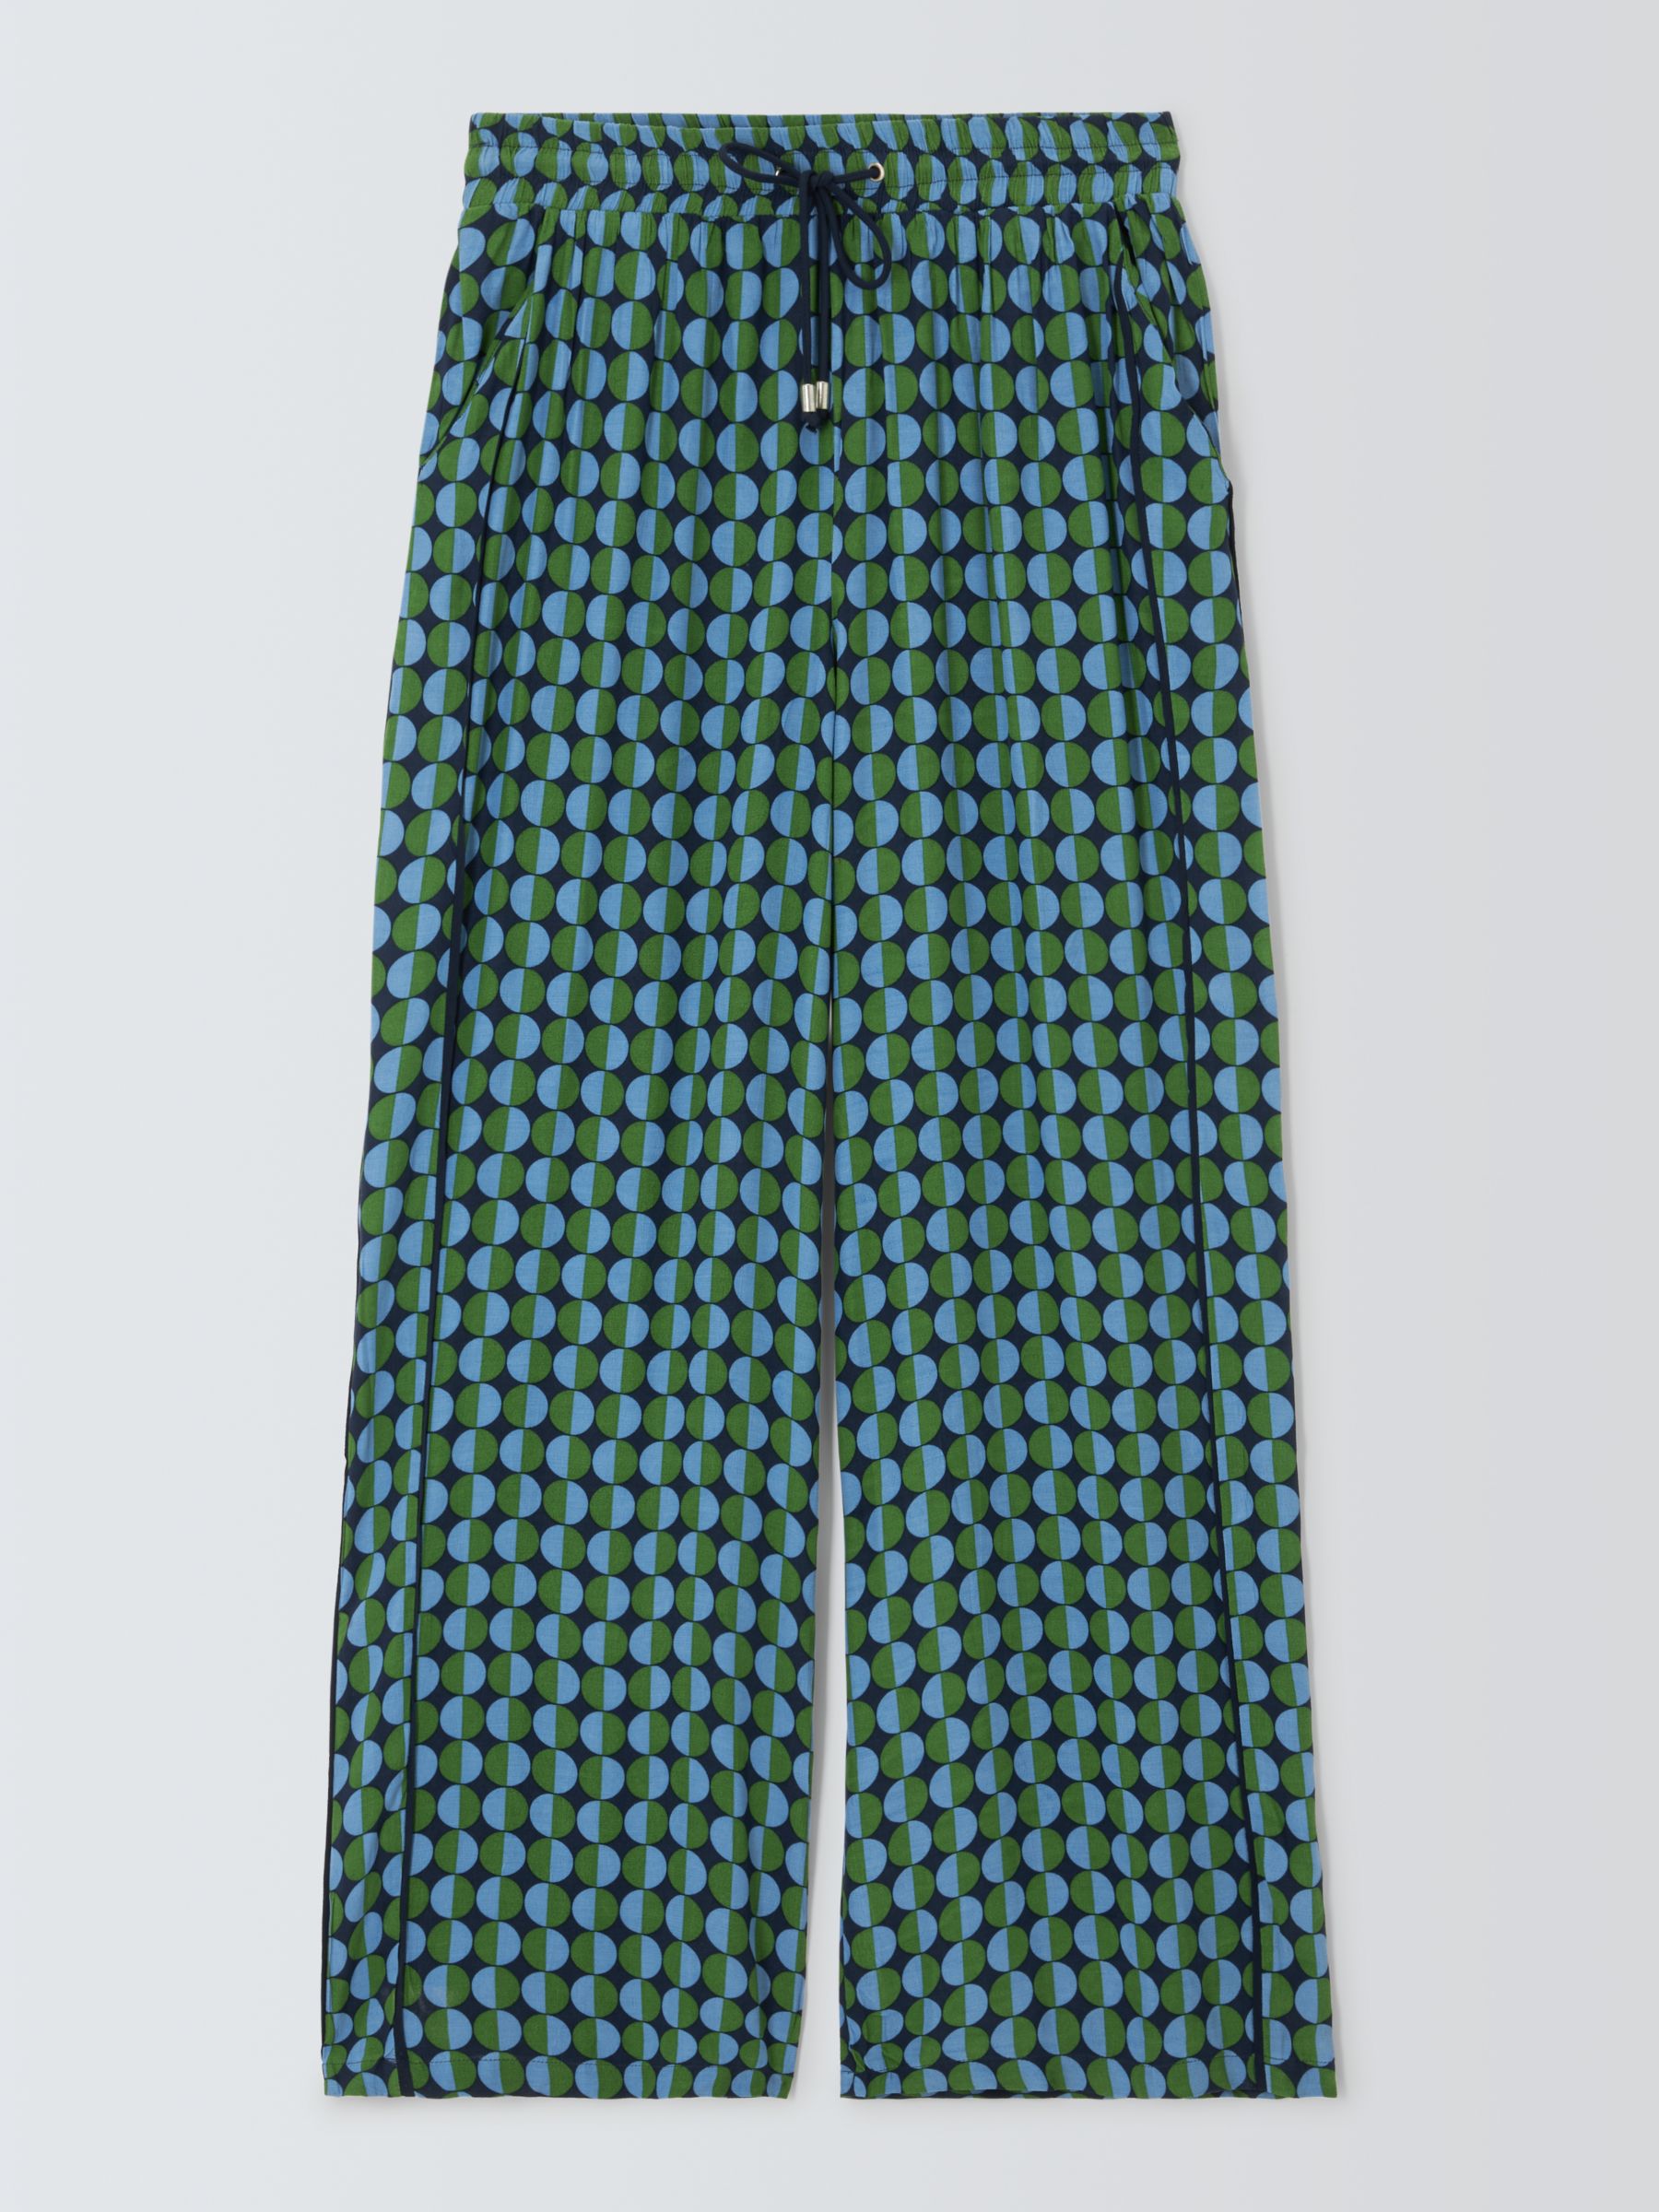 John Lewis ANYDAY Geometric Print Trousers, Navy/Multi, 12